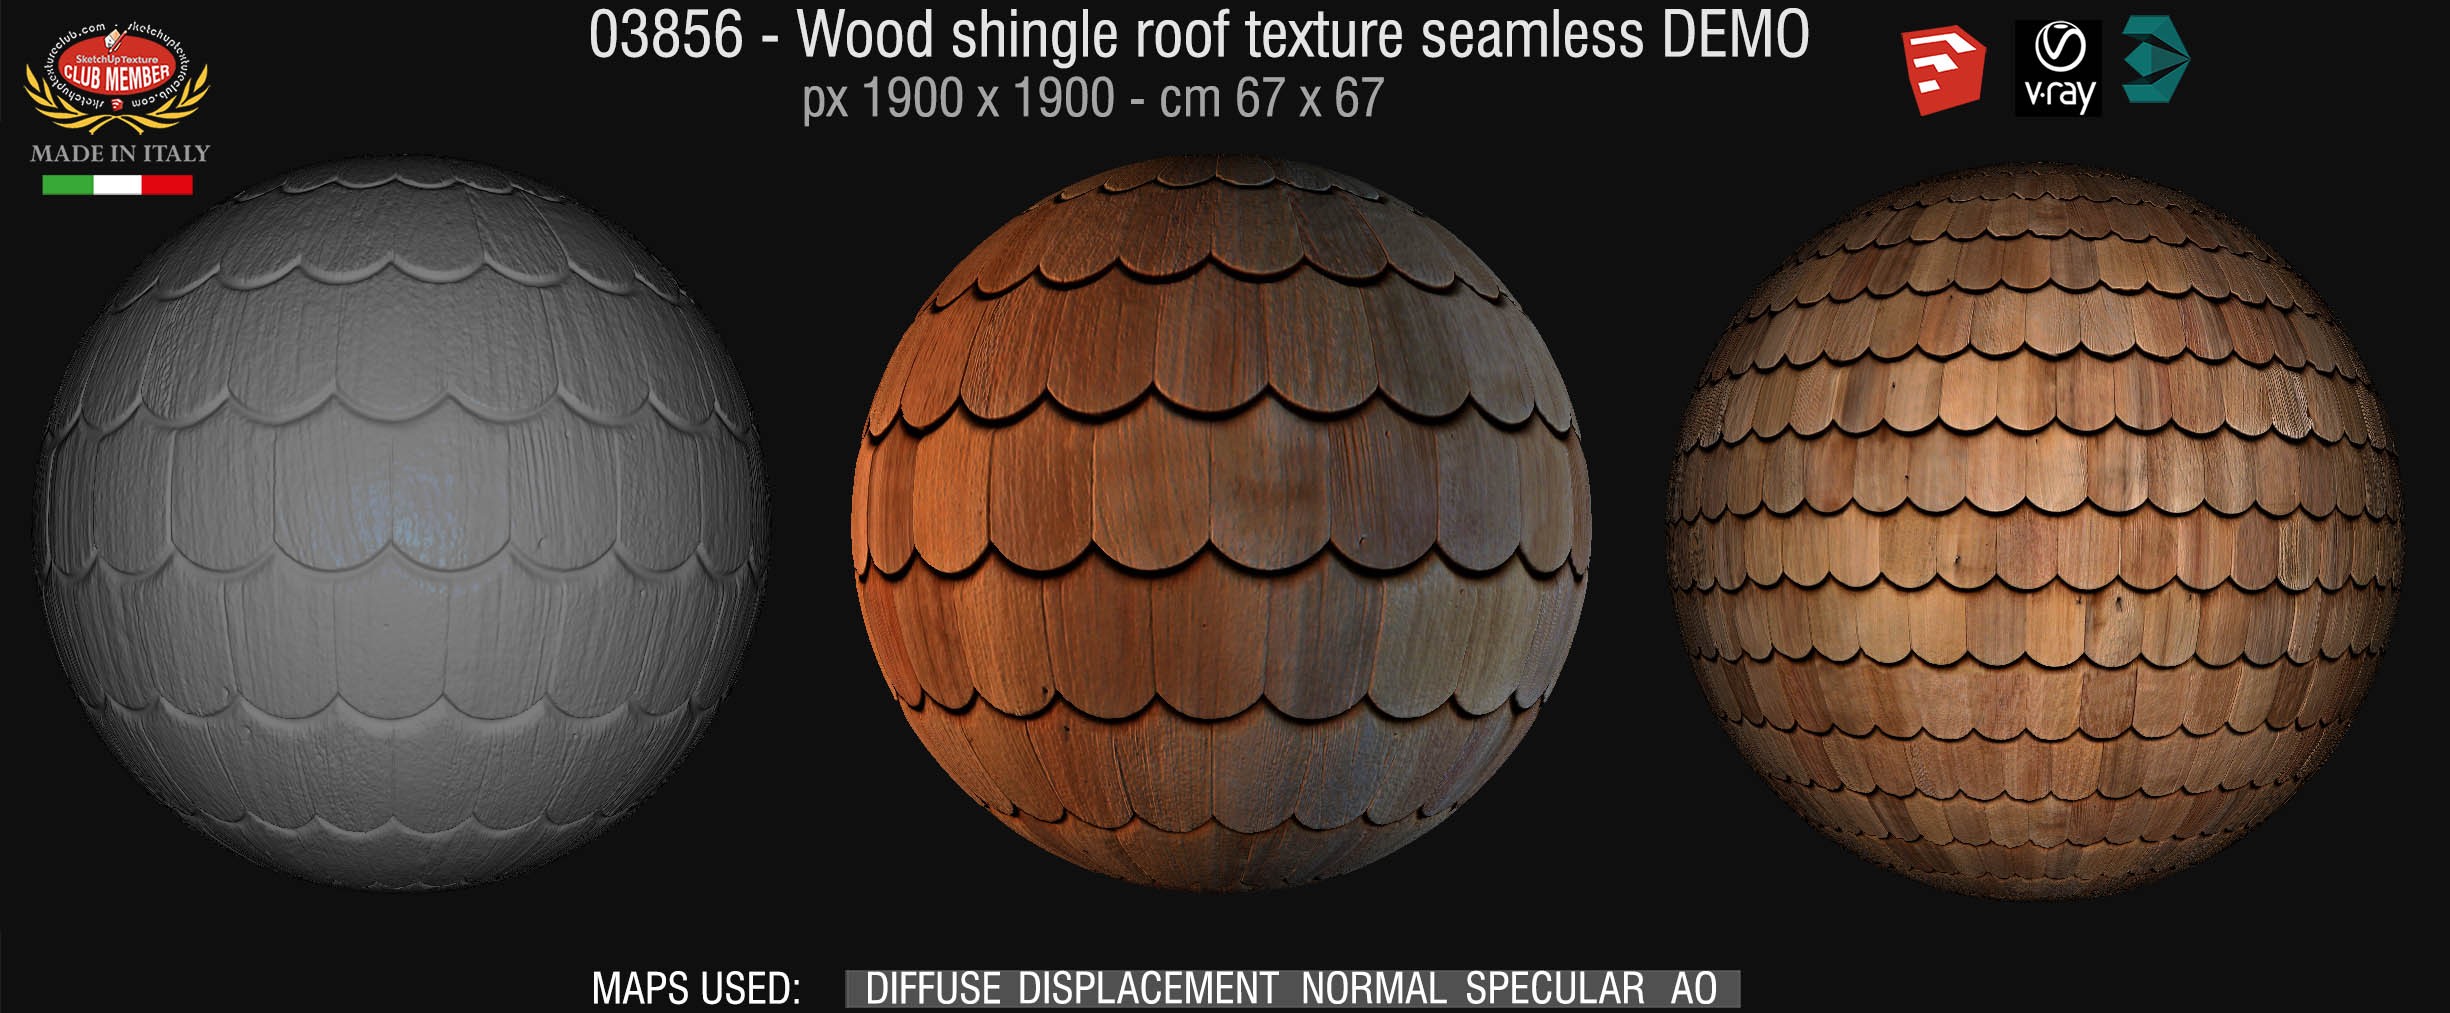 03856 Wood shingle roof texture seamless + maps DEMO